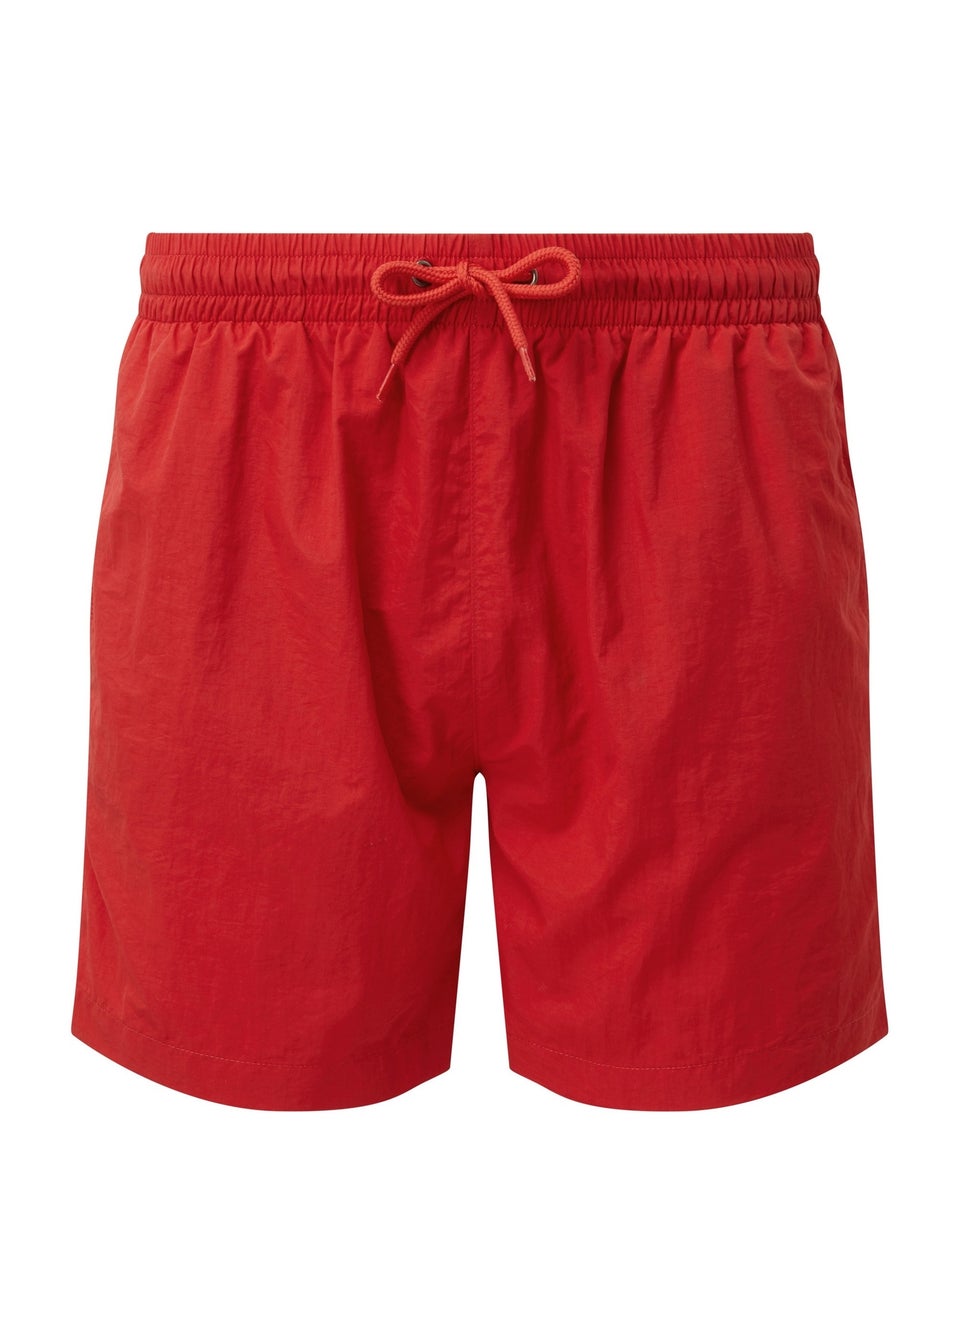 Asquith & Fox Red Swim Shorts